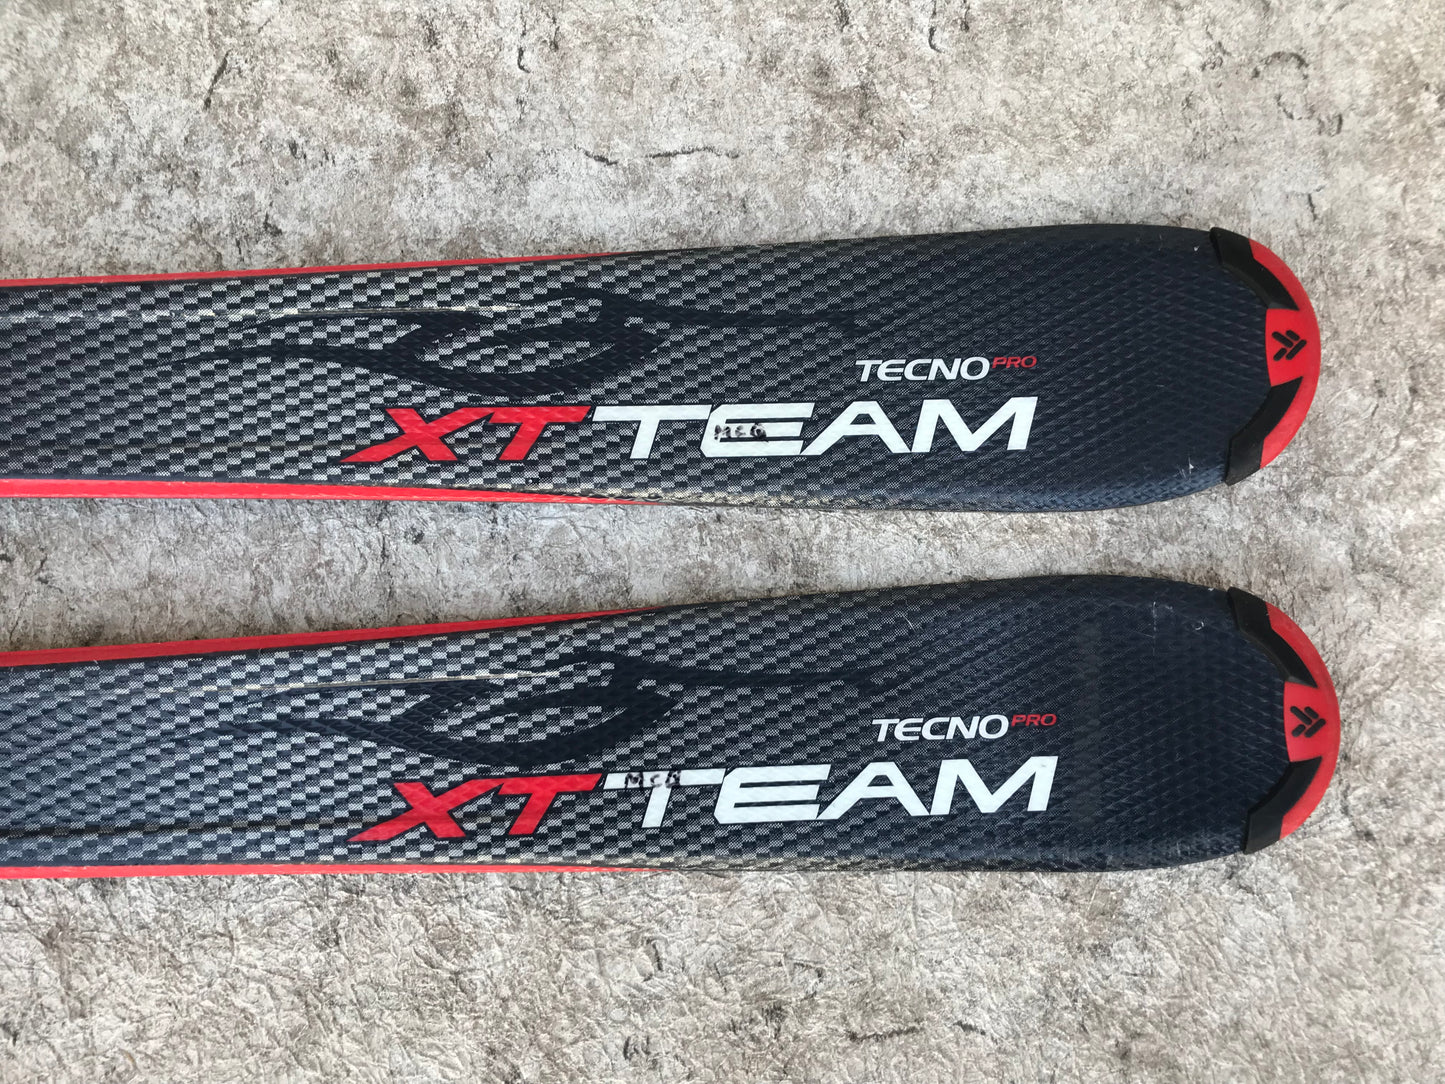 Ski 130 Tecno Pro X Team Red Black Parabolic With Bindings